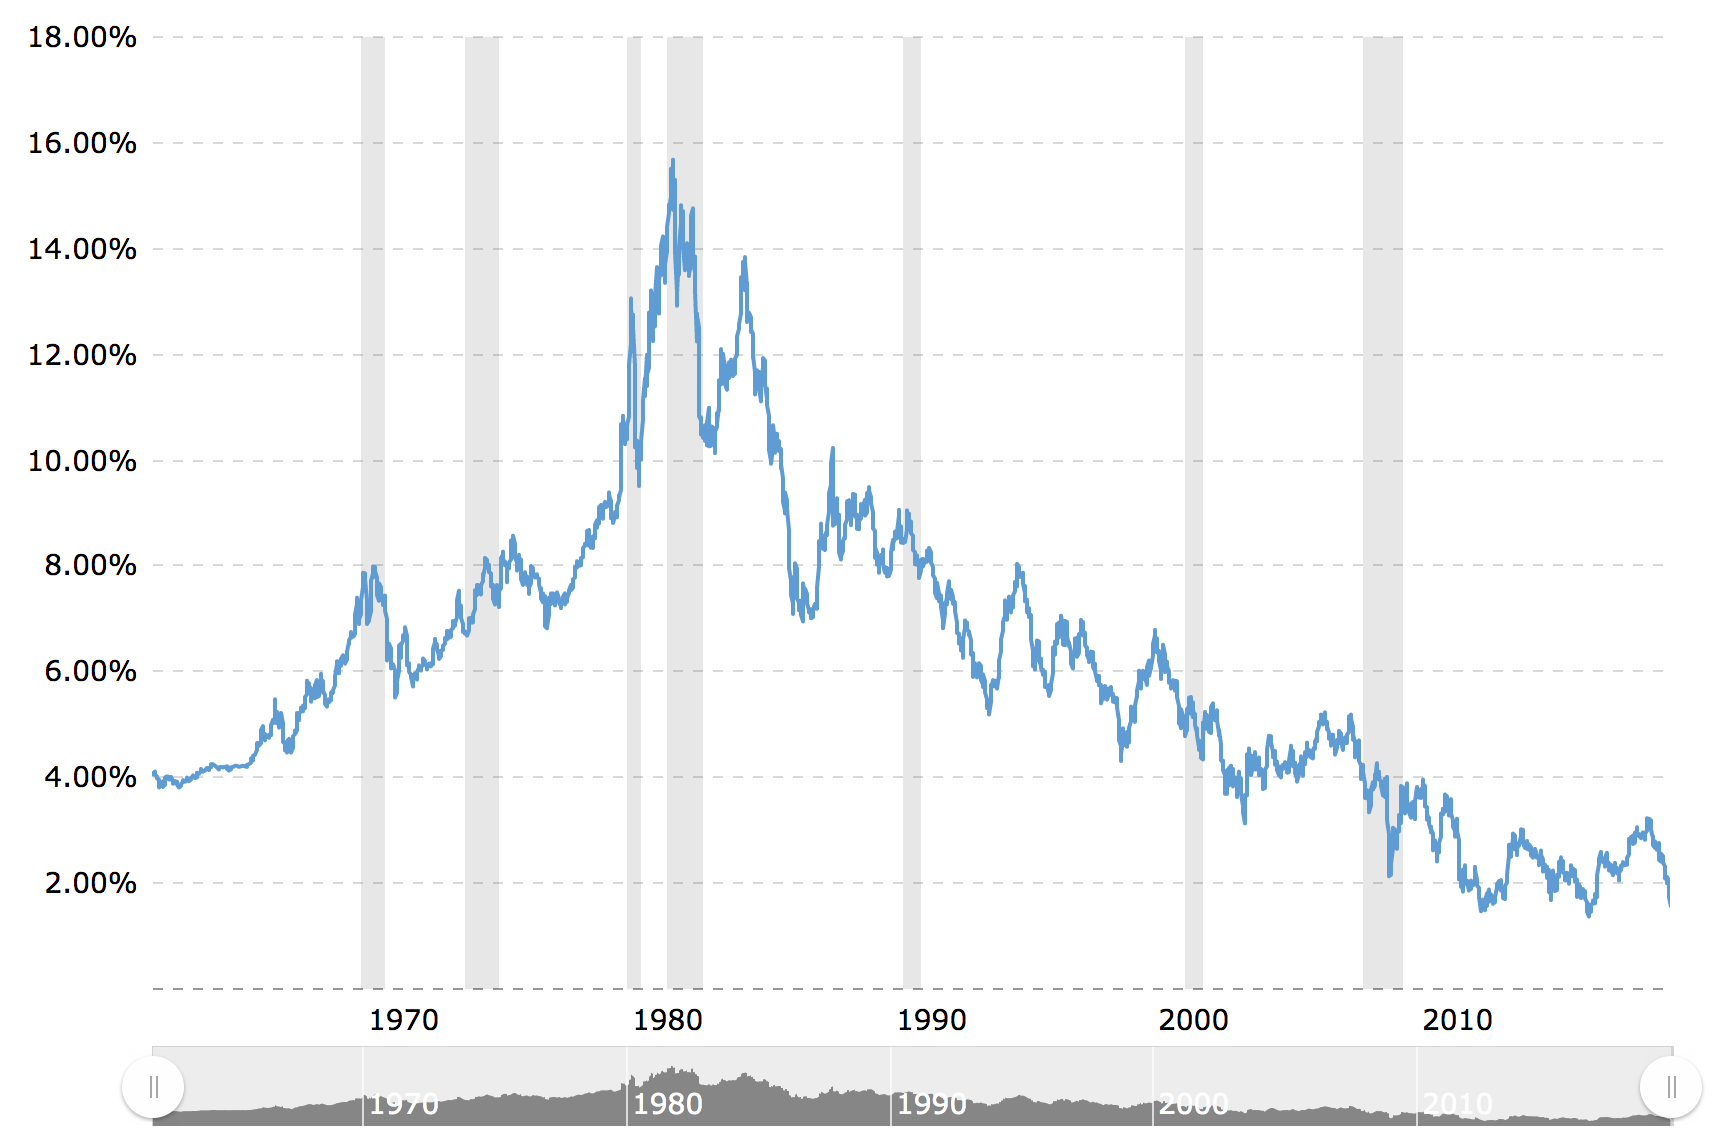 Ten Year Treasury Yield Chart